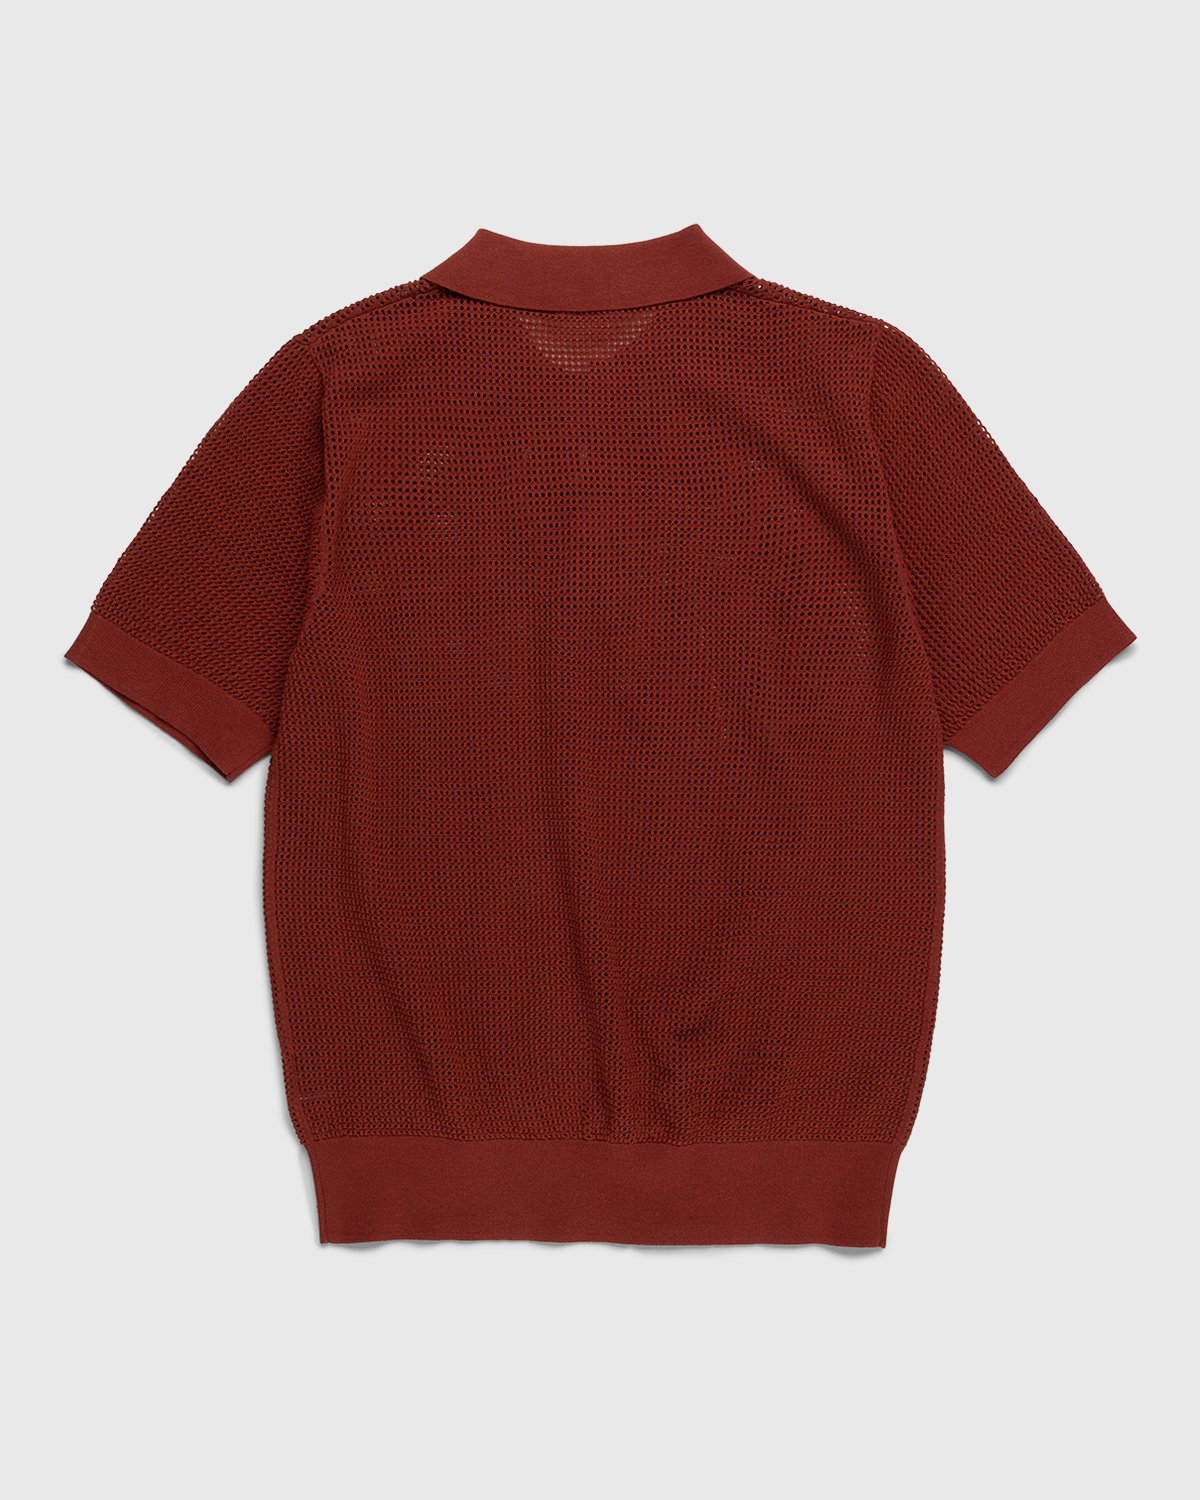 Dries van Noten - Jael Polo Shirt Brique - Clothing - Red - Image 2